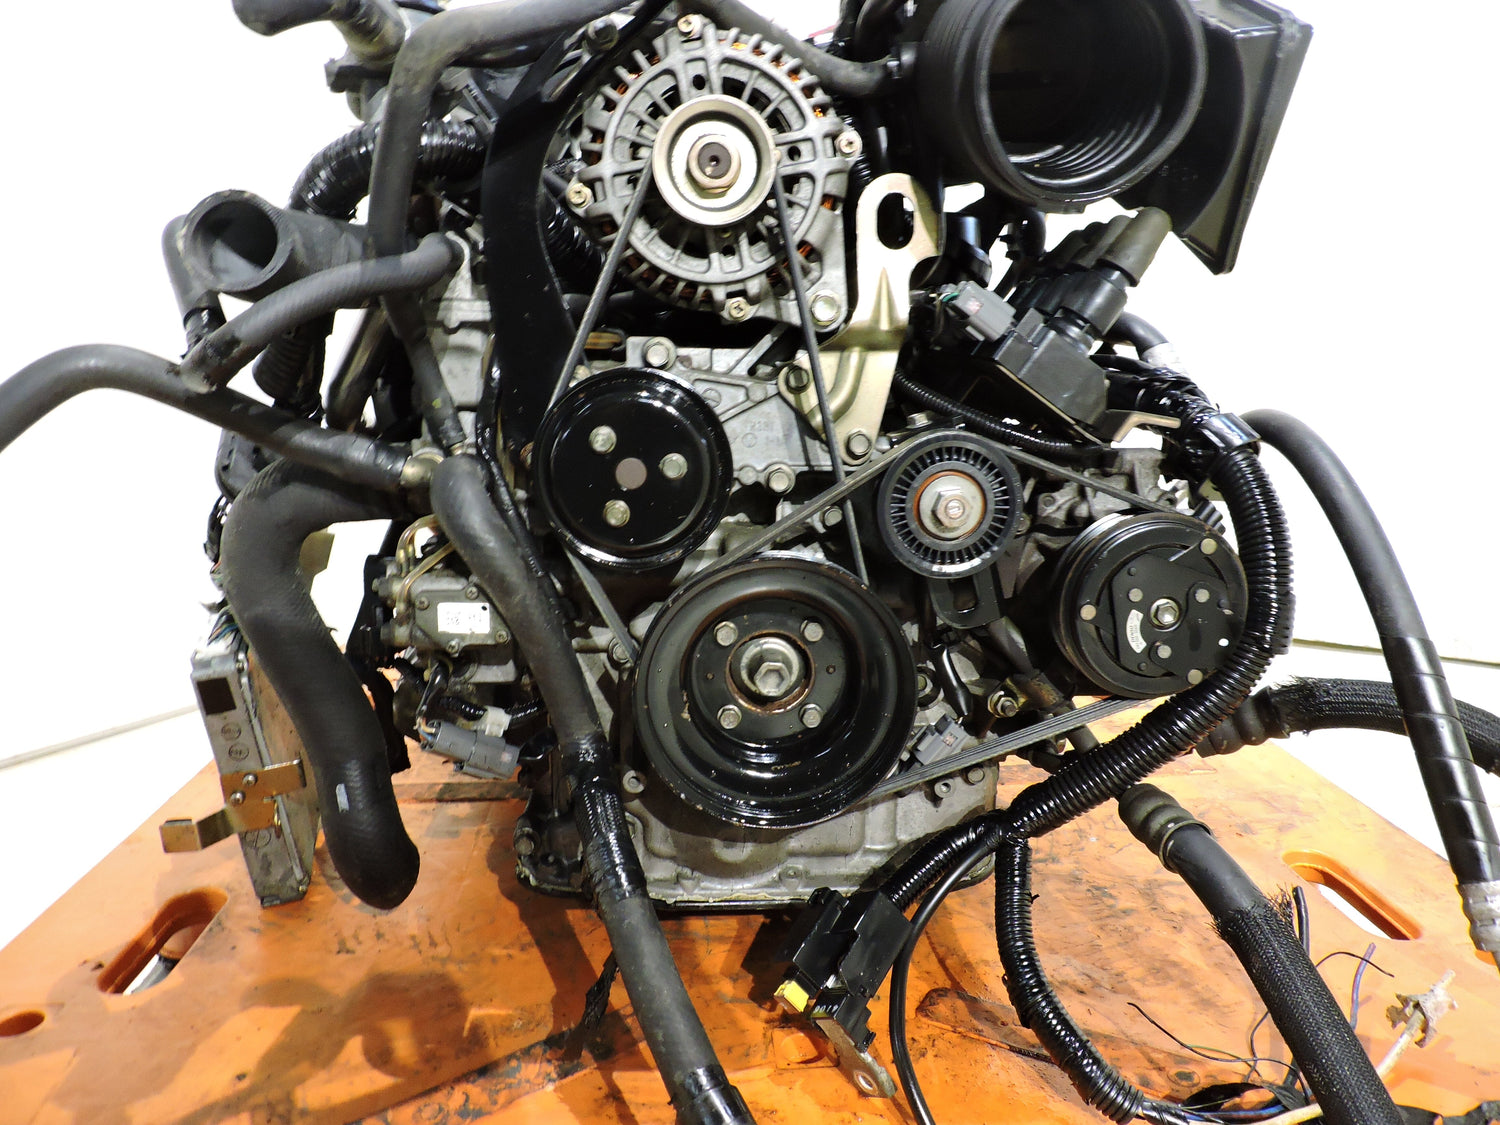 Mazda RX-8 (2003-2008) 1.3L JDM Engine For 5 SPEED Manual Models - 13B 4-PORT - 14 DAY WARRANTY